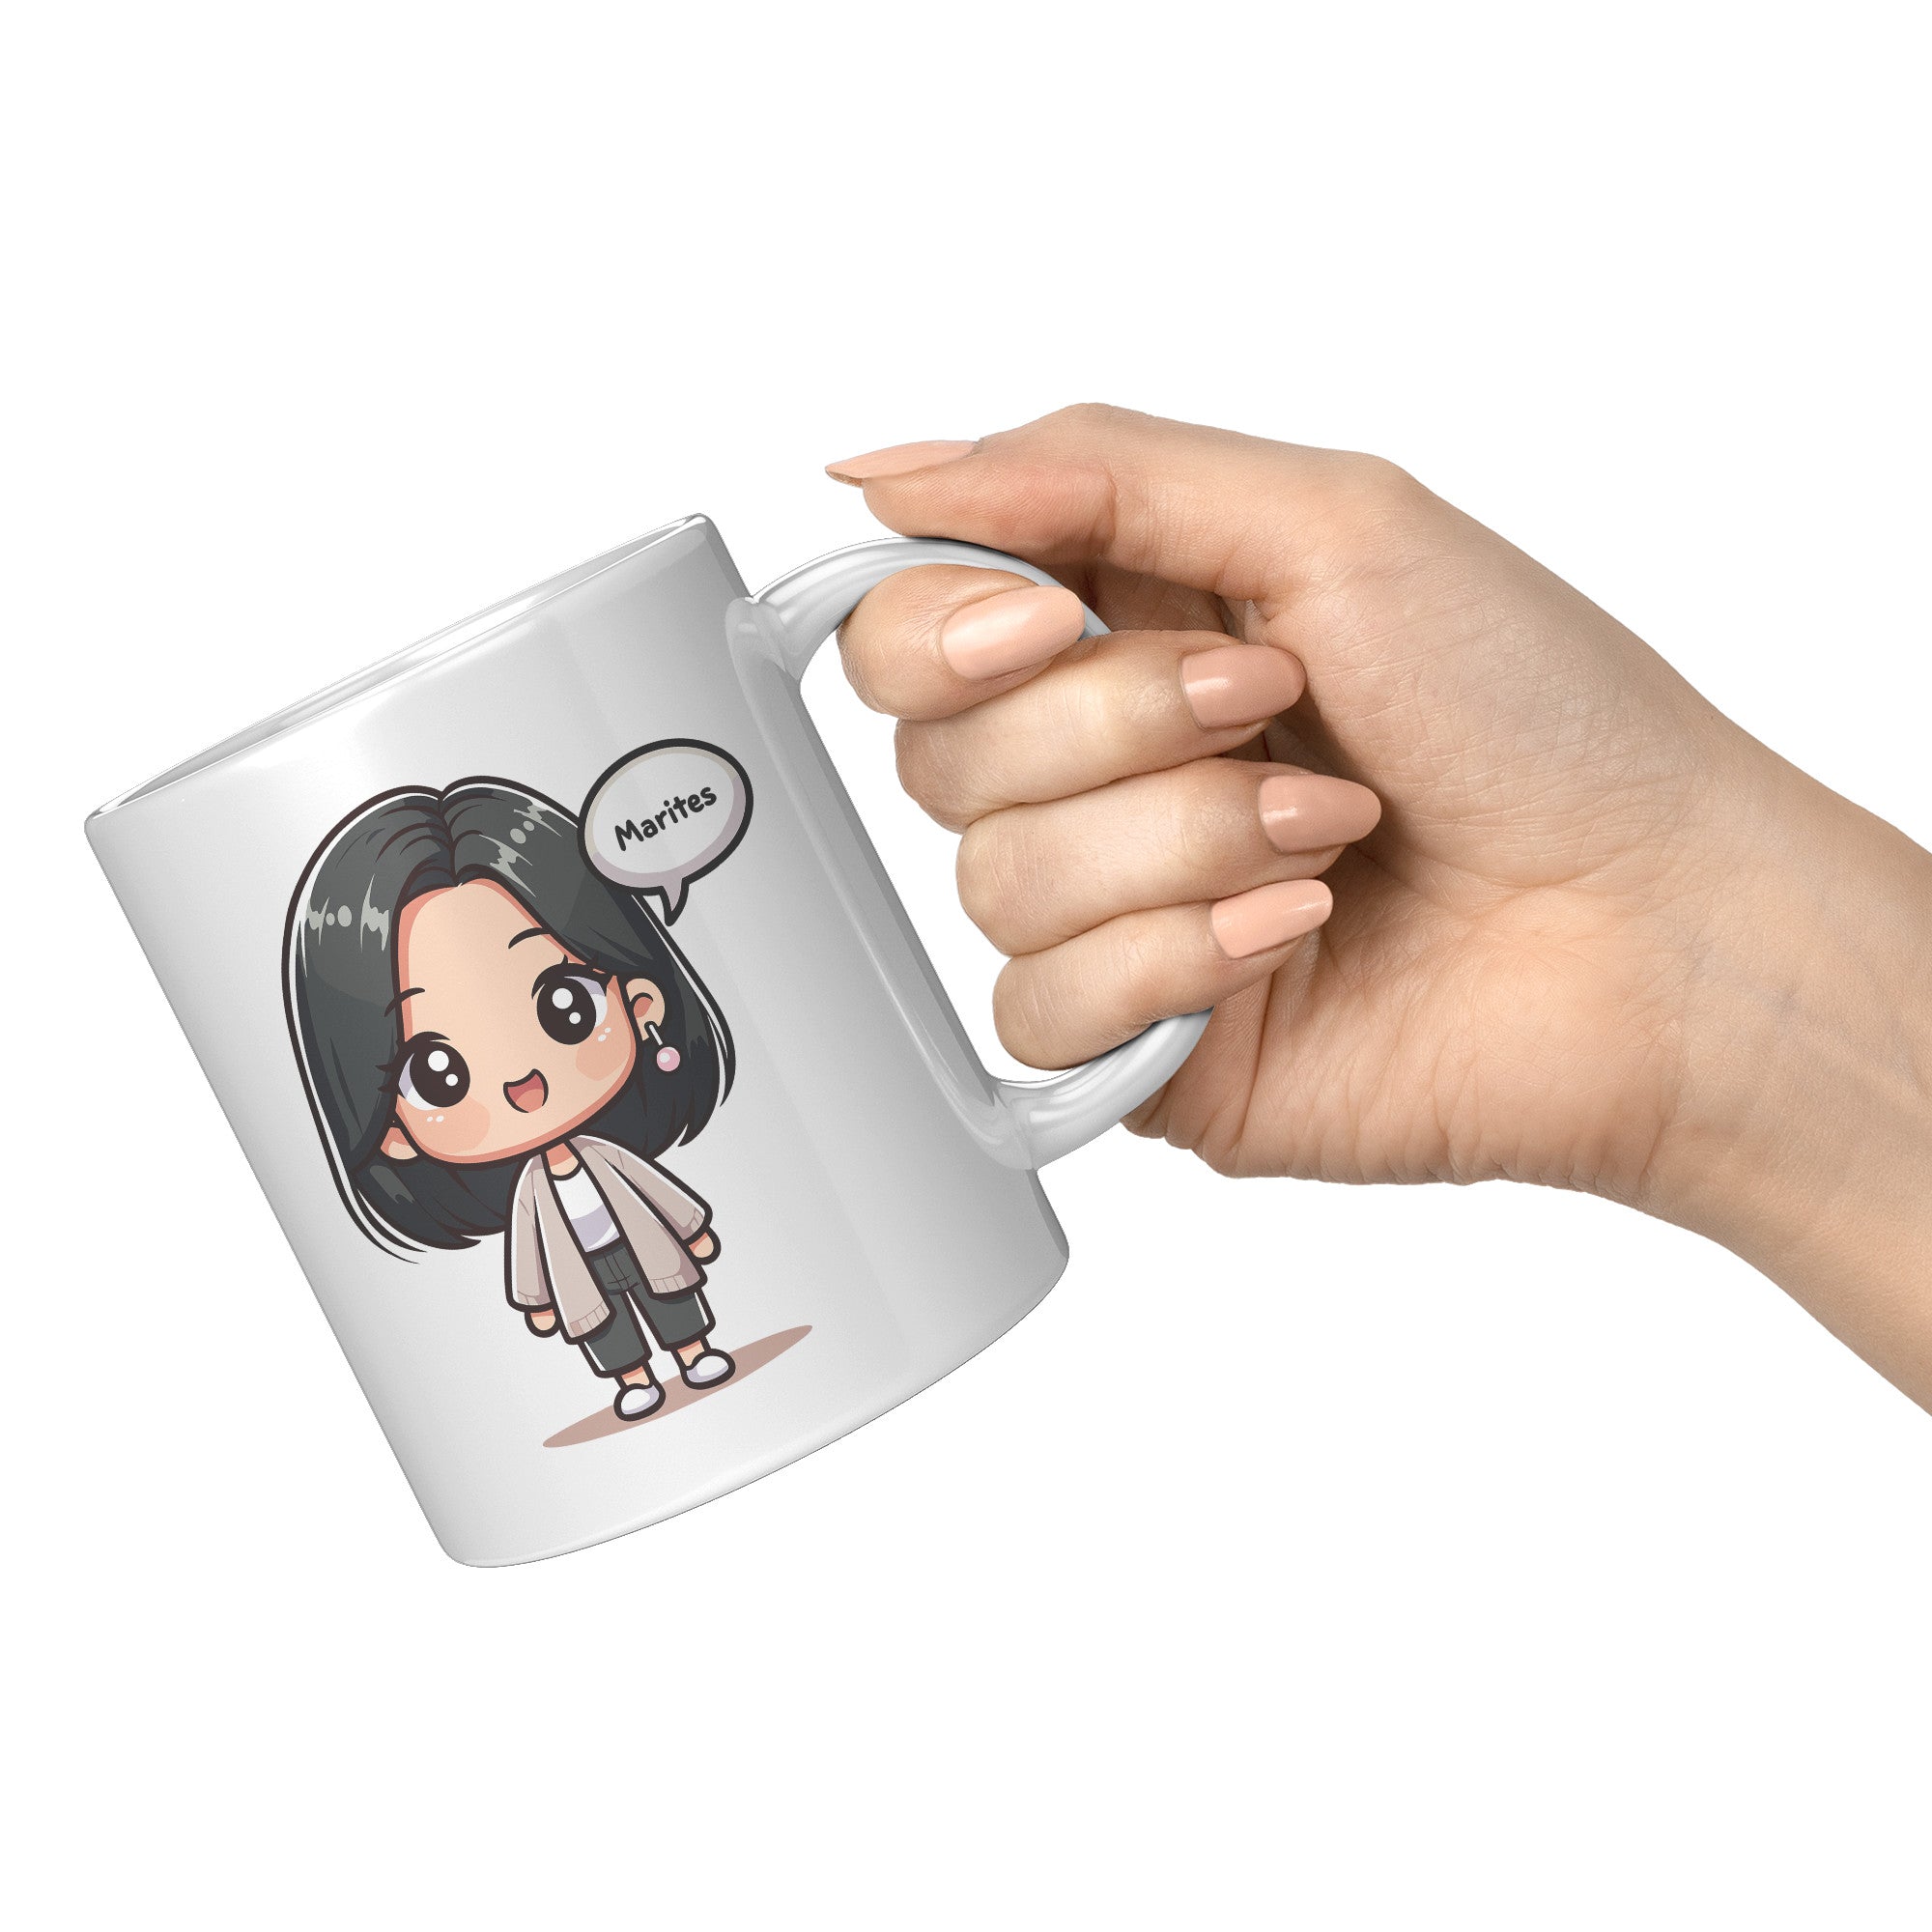 "Marites Gossip Queen Coffee Mug - Cute Cartoon 'Ano Ang Latest?' Cup - Perfect Chismosa Gift - Filipino Slang Tea Mug" - D